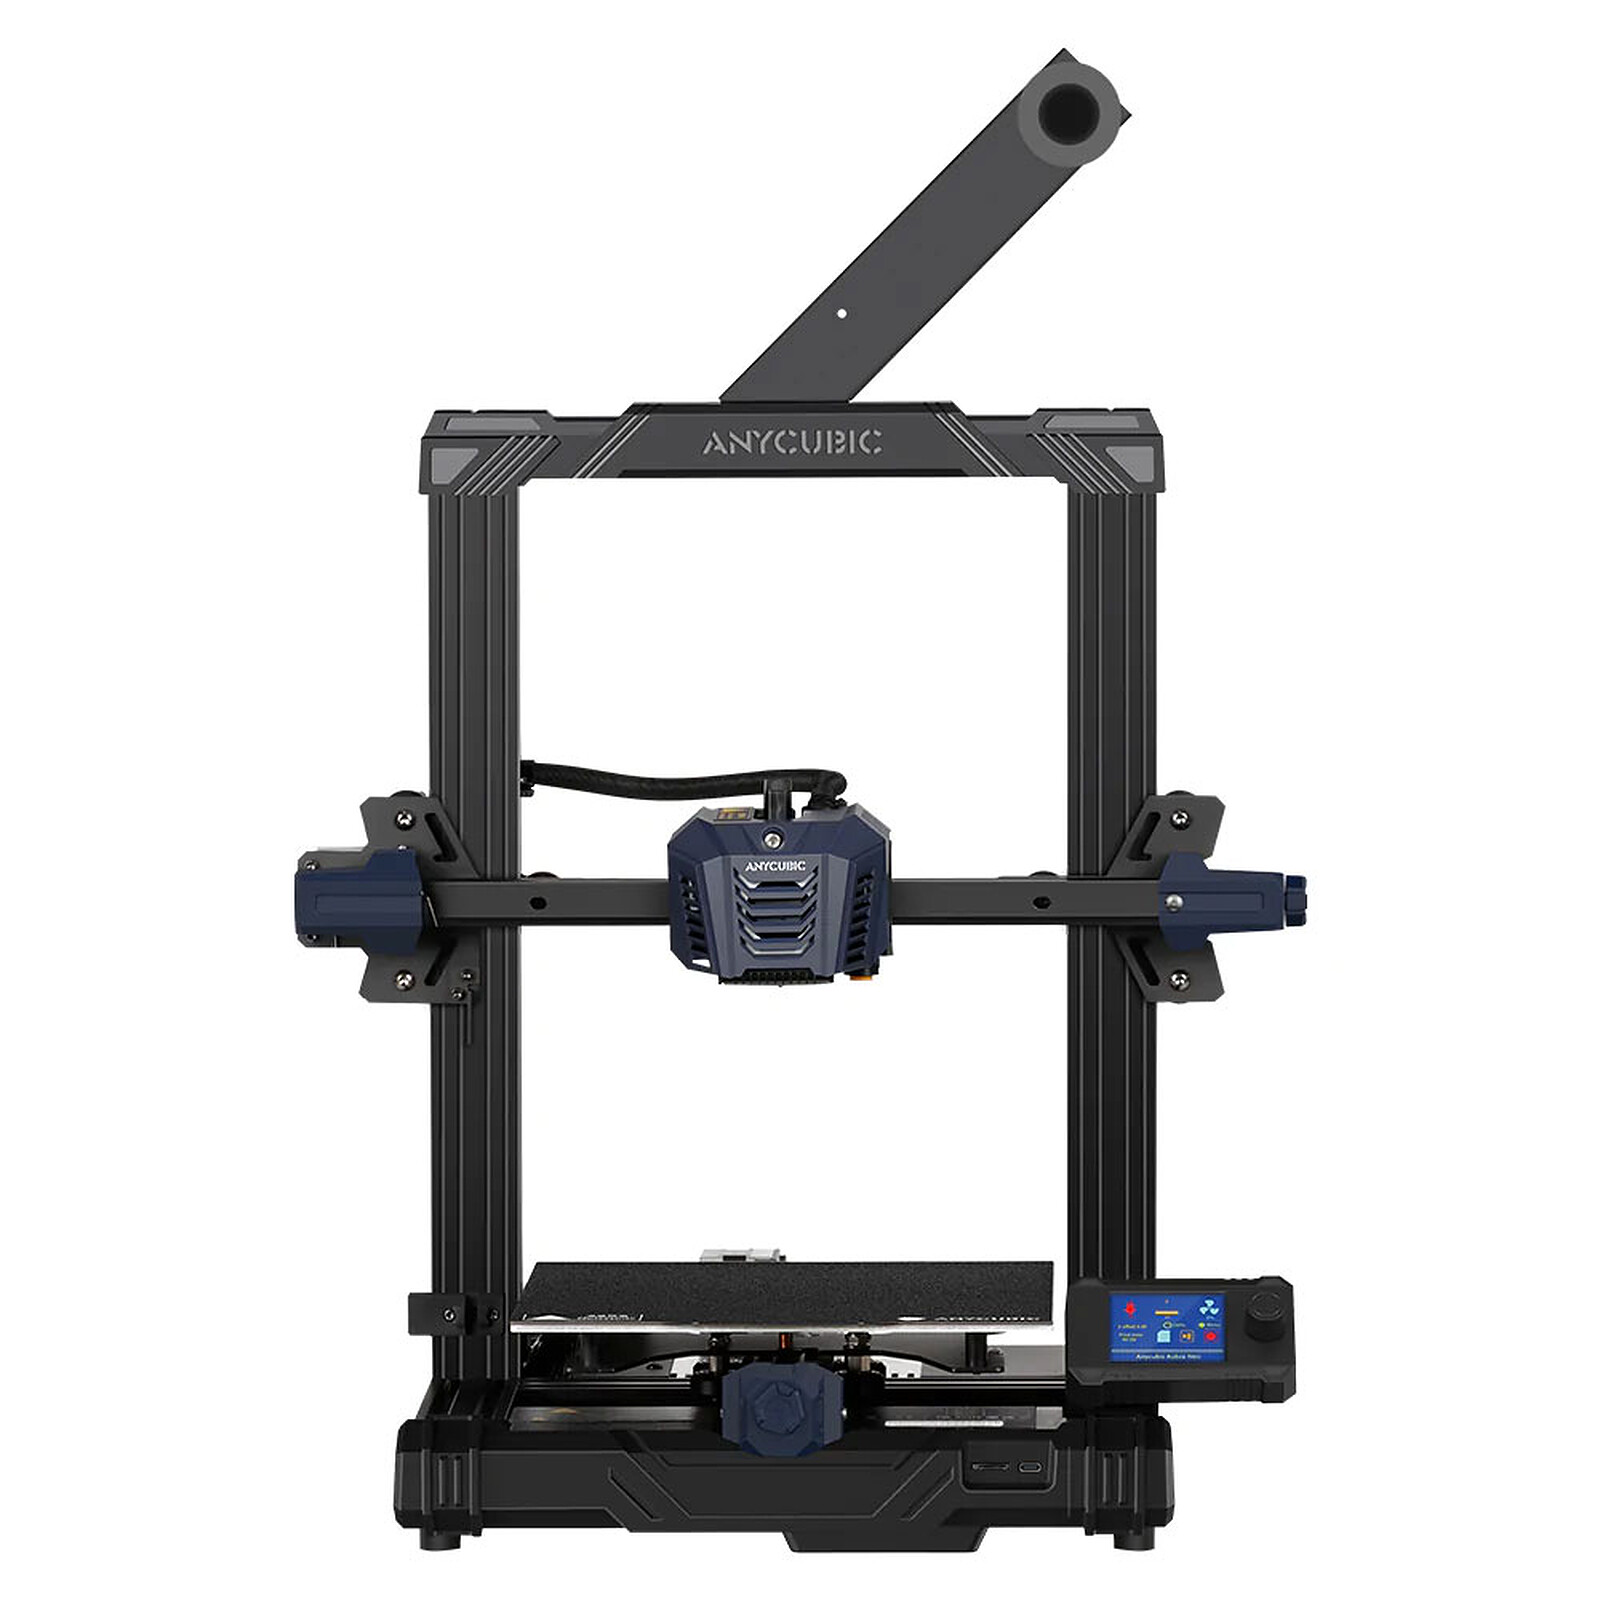 Creality Ender 5 S1 - 3D printer - LDLC 3-year warranty